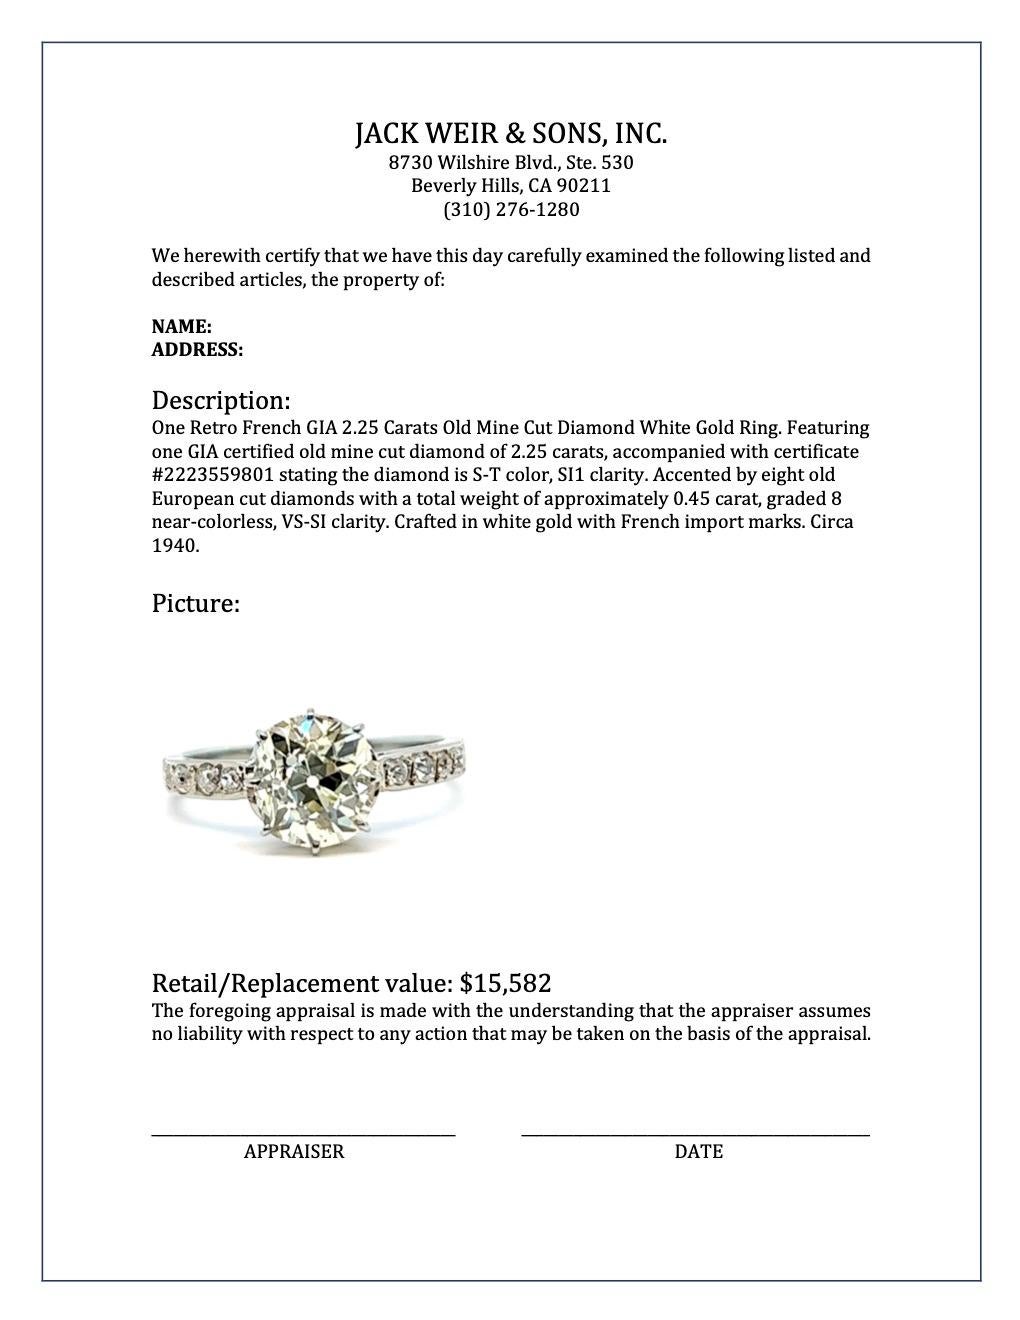 Retro French GIA 2.25 Carats Old Mine Cut Diamond White Gold Ring 4